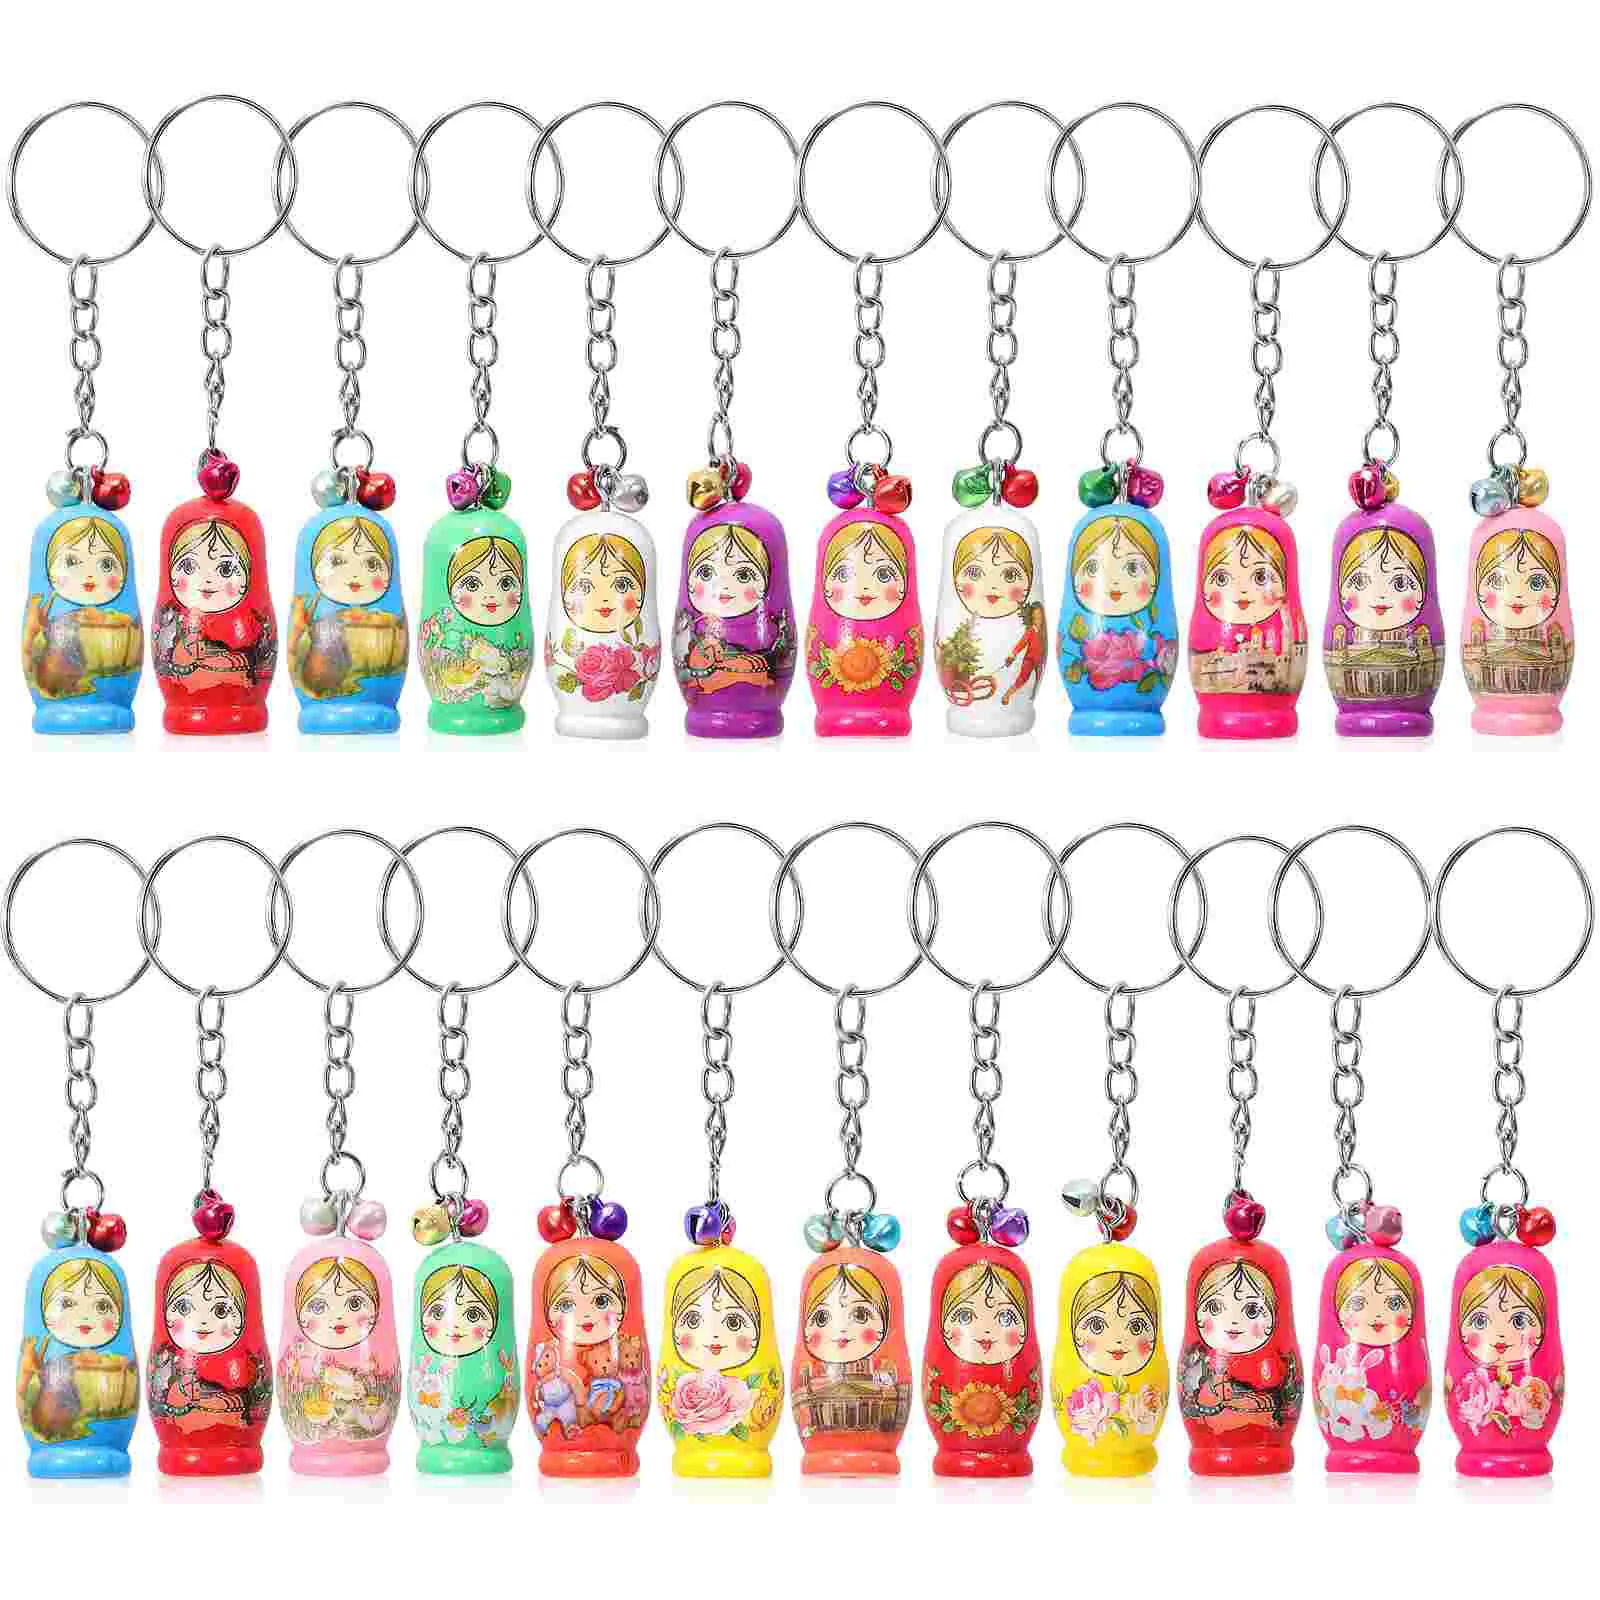 

24 Pcs Matryoshka Keychain Keychains Keys Pendant Rings Holders Mater Toys Cars Russian Nesting Dolls Wooden Backpack